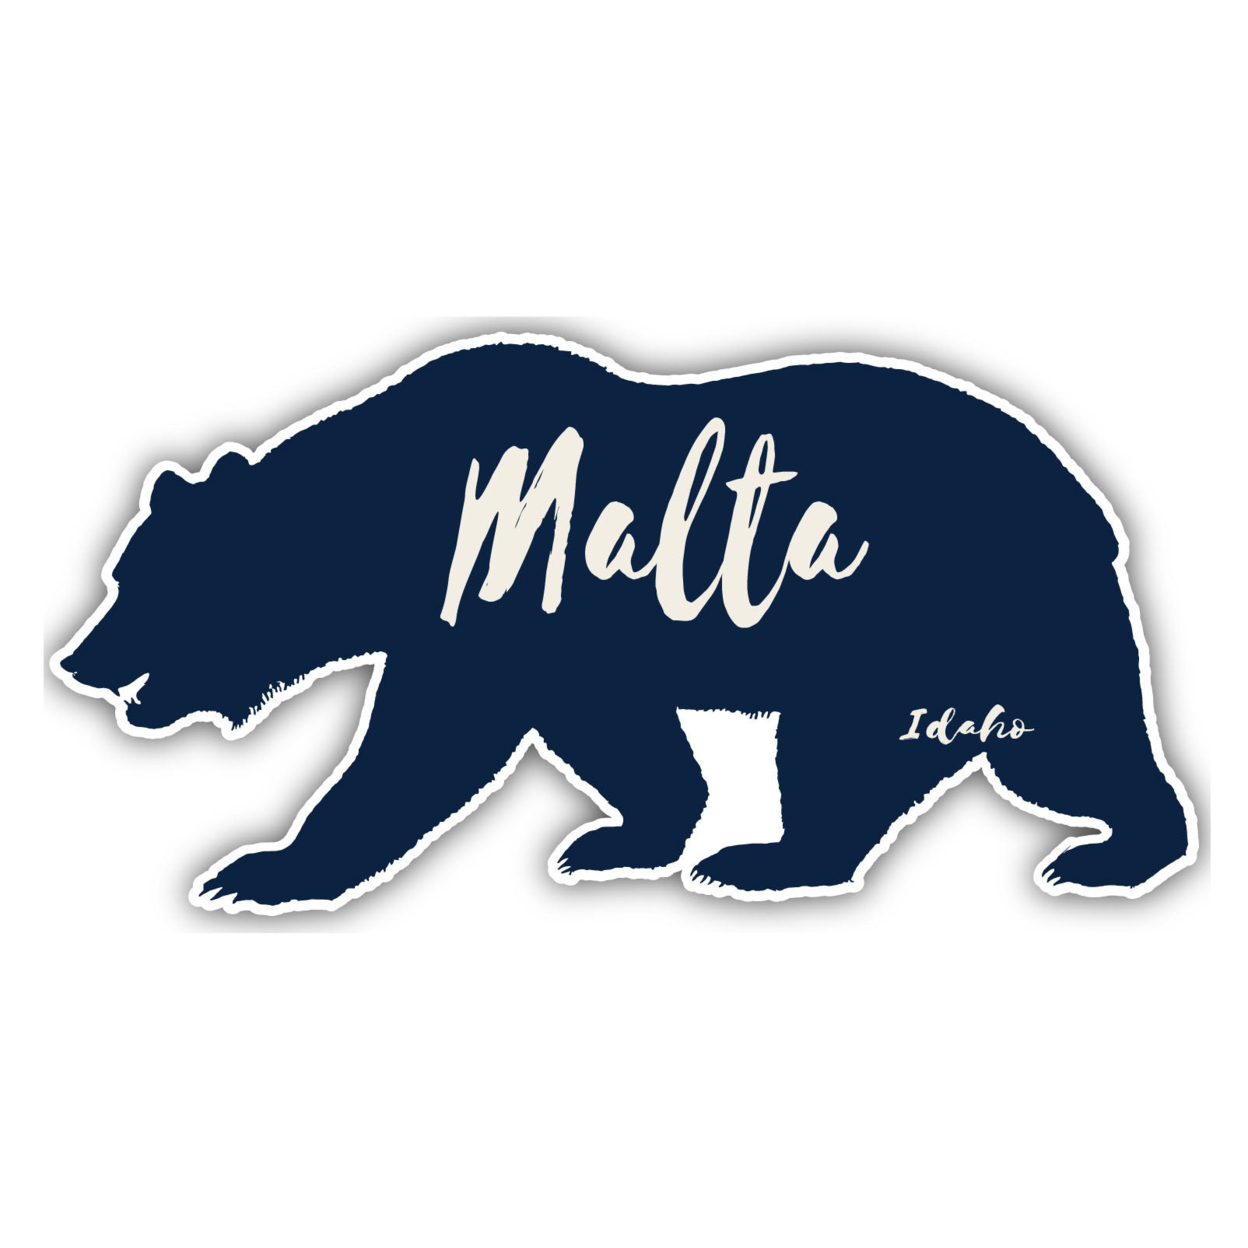 Malta Idaho Souvenir Decorative Stickers (Choose Theme And Size) - 2-Inch, Bear